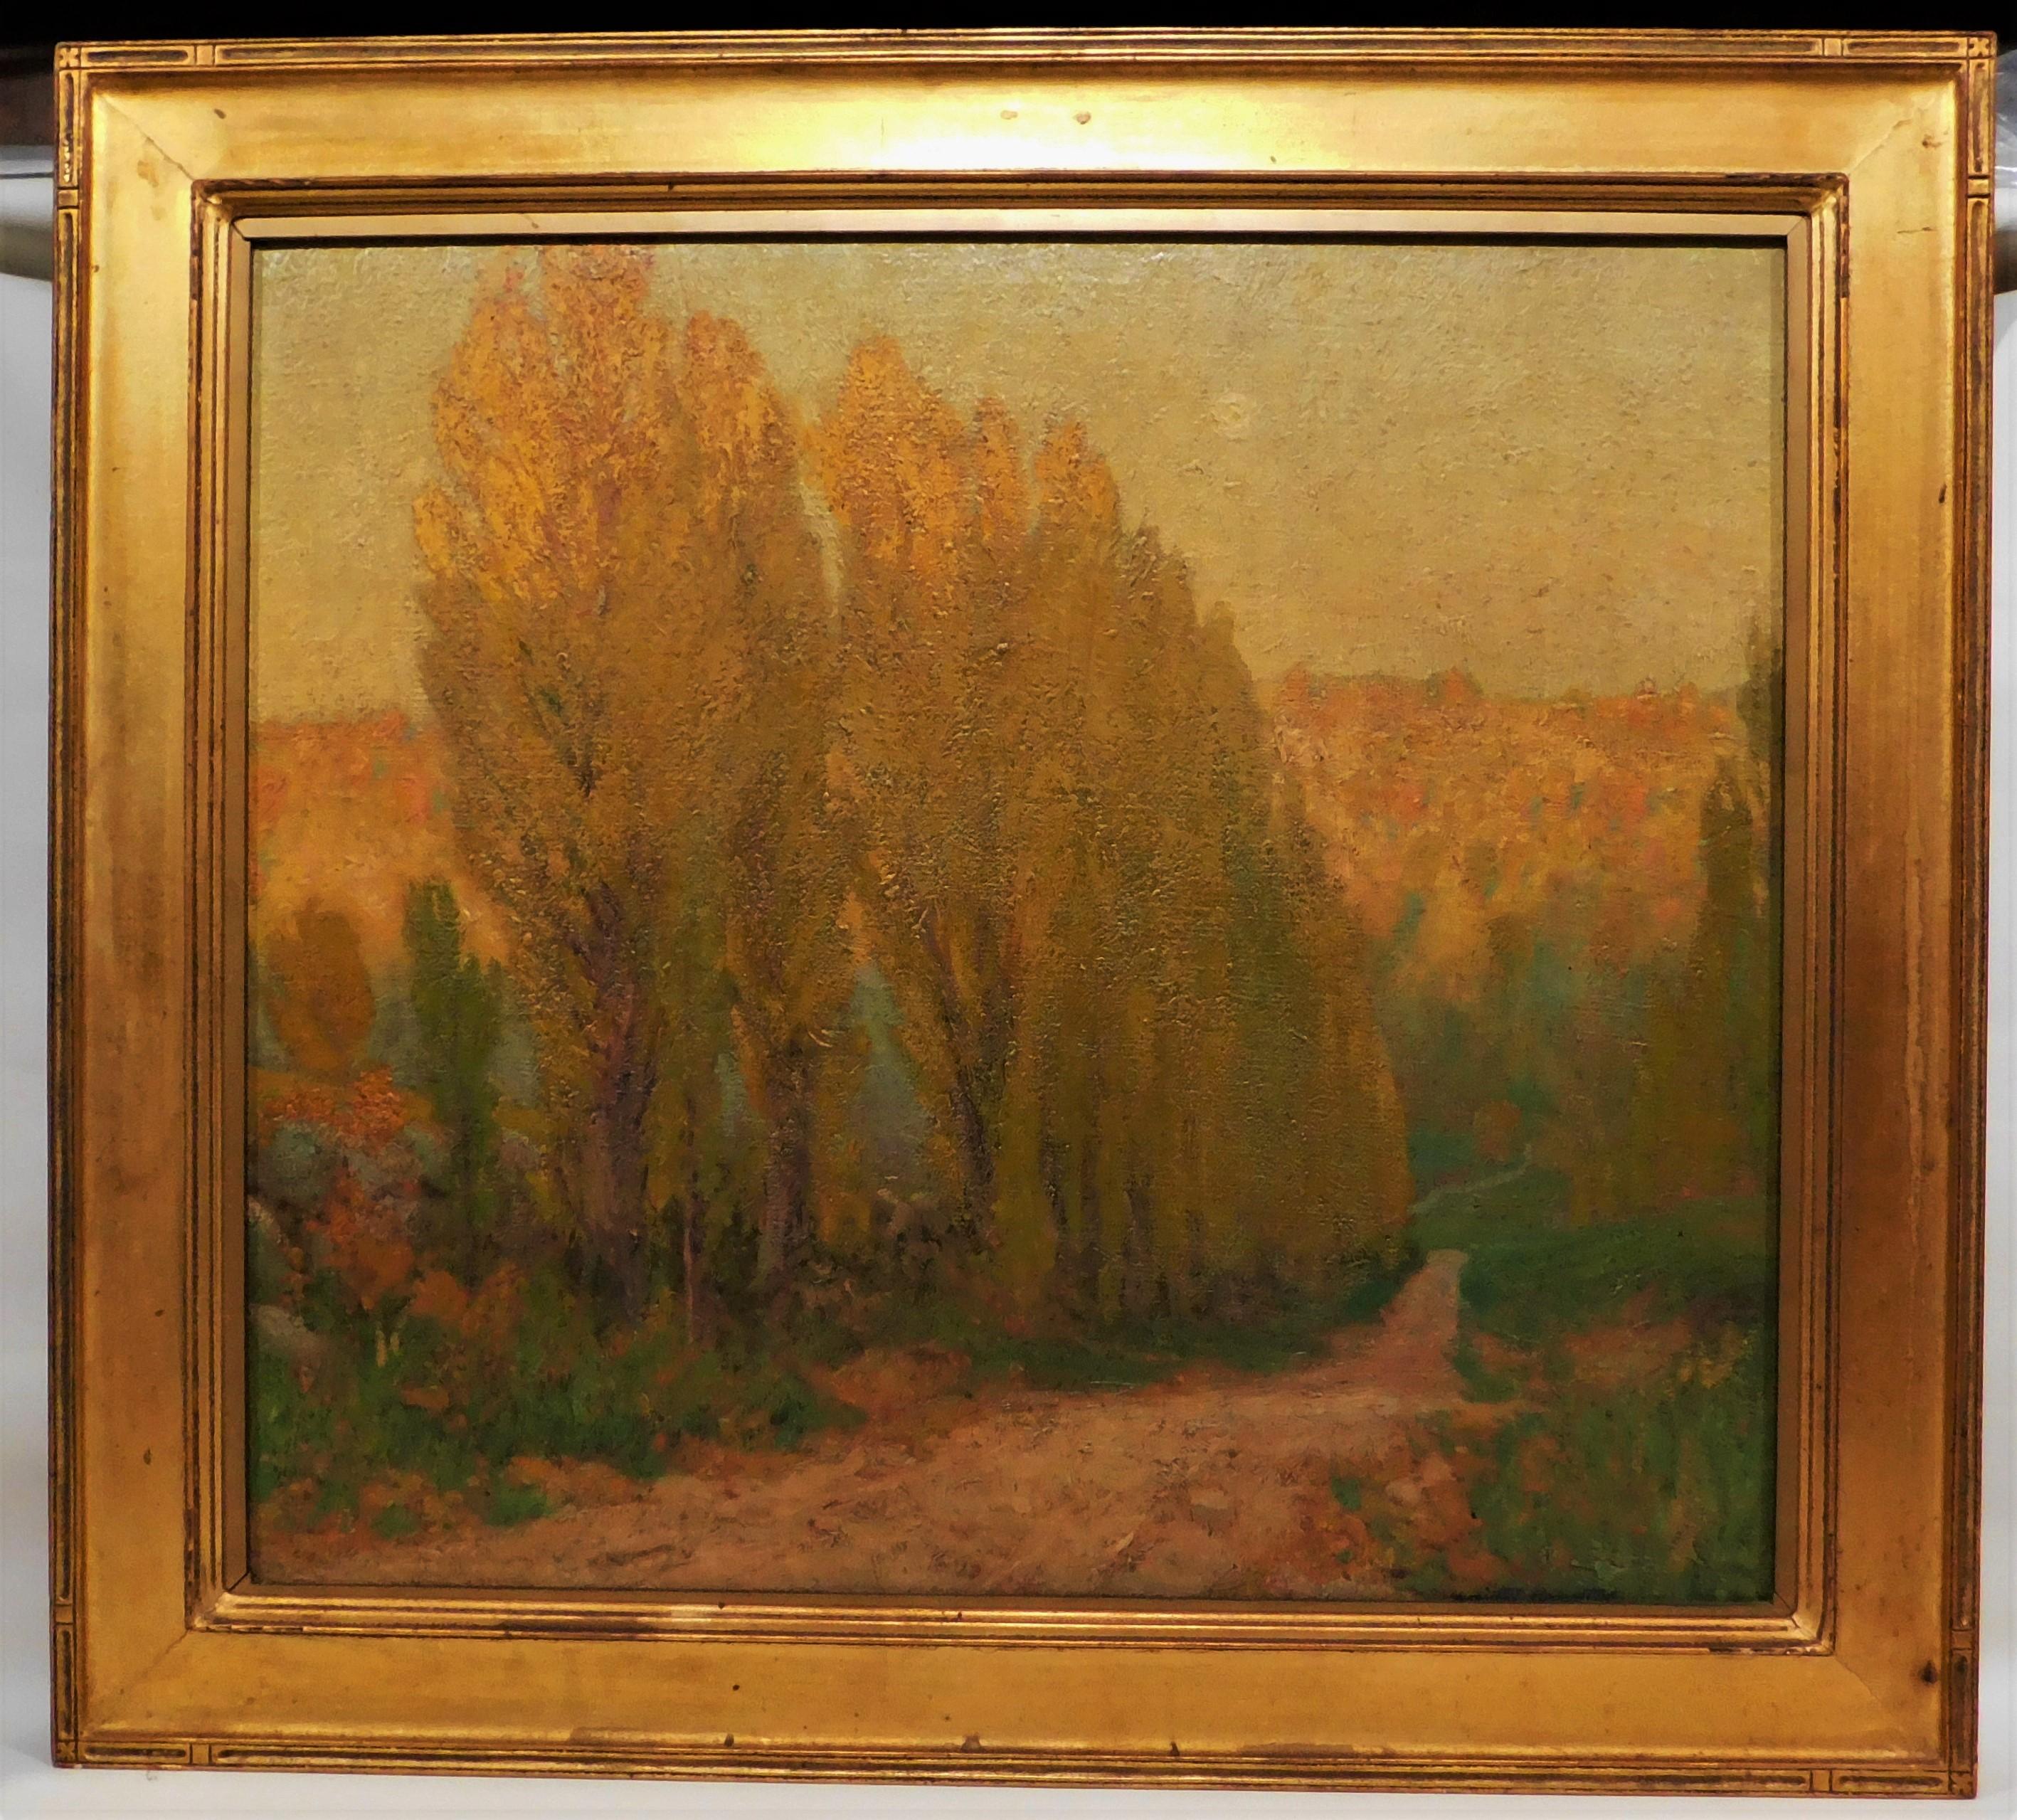 Re-known American landscape artist Hamilton Hamilton oil on canvas in a nice gold frame. 